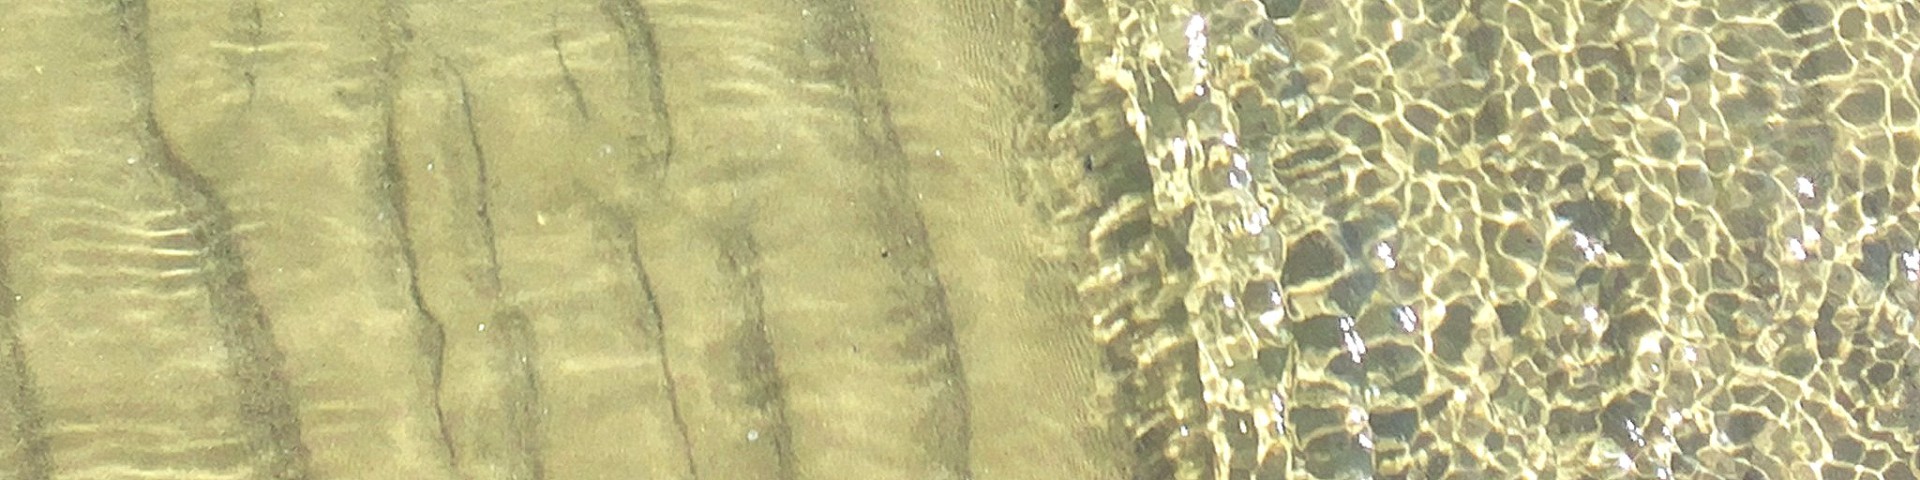 Cupra Marittima, písčitý podklad v moři